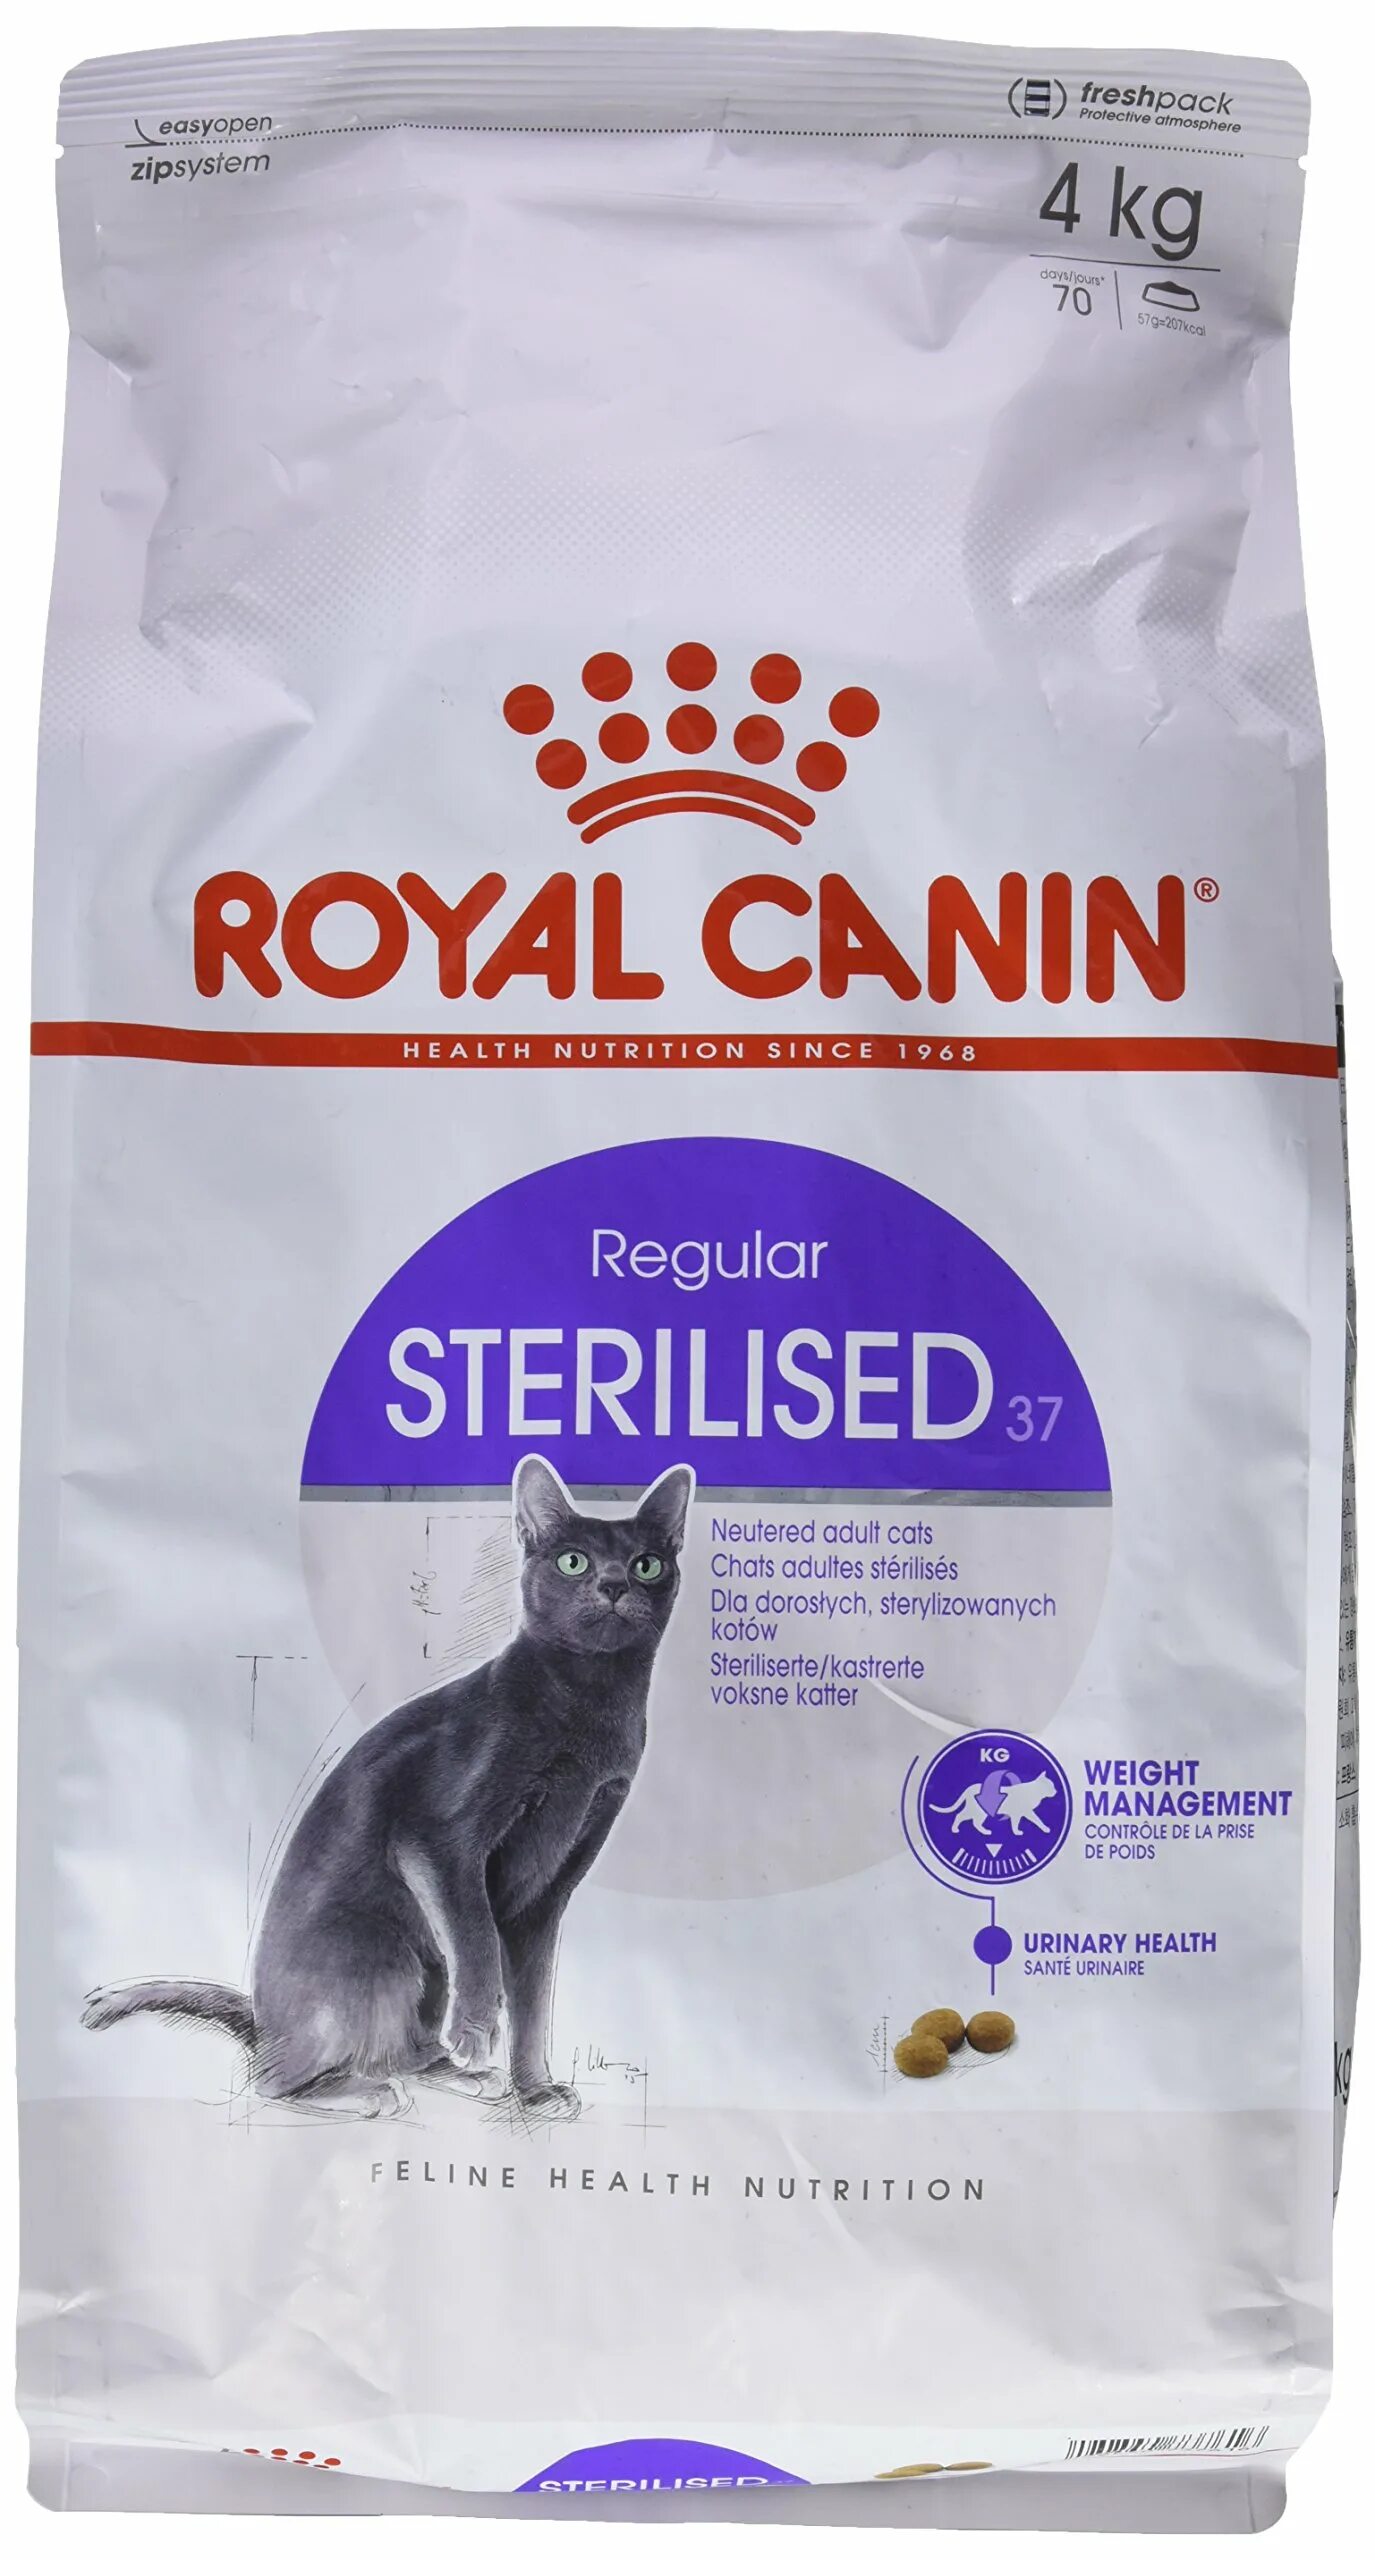 Royal canin для кошек sterilised 37. Роял Канин стерилизед для кошек. Роял Канин Стерилайзд 37 для кошек. Роял Канин для кошек стерилизованных 4 кг. Роял Канин для стерилизованных кошек 2.